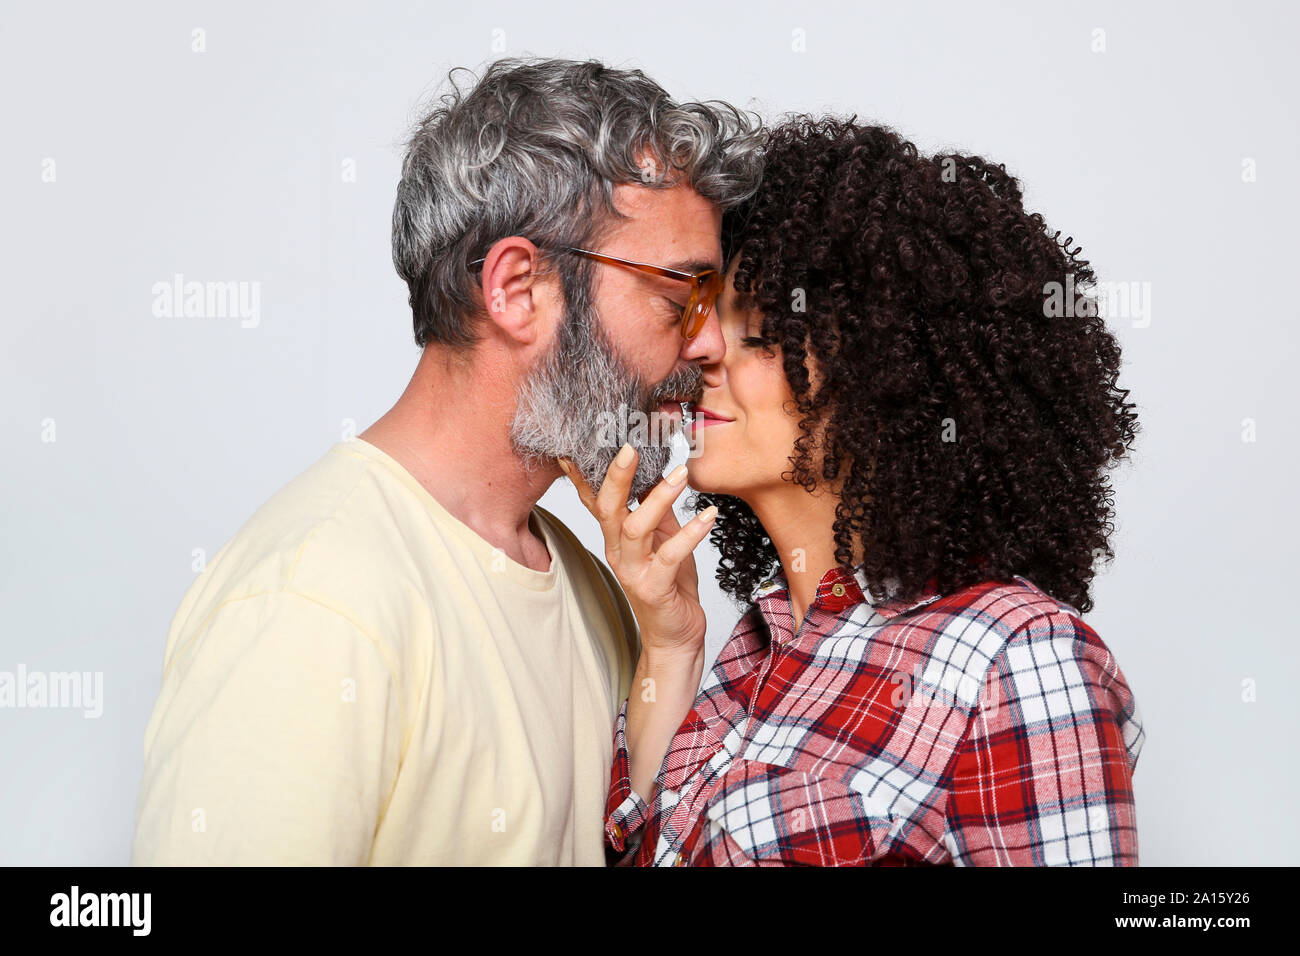 Portrait of kissing couple Stock Photo